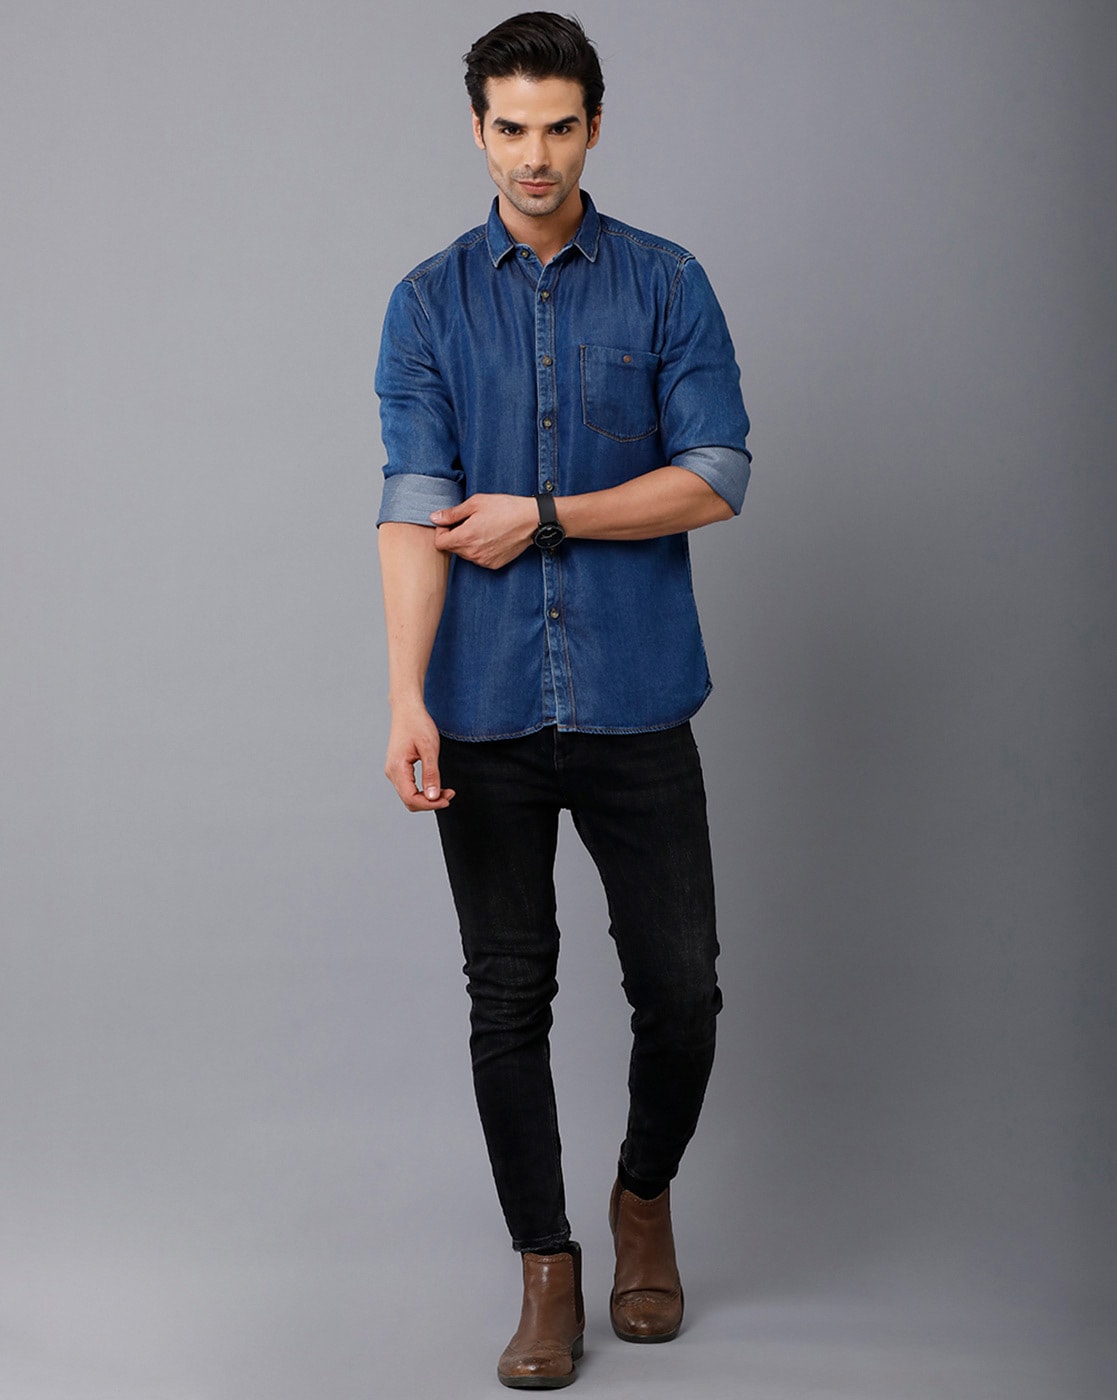 jeans men - Buy jeans men Online Starting at Just ₹318 | Meesho